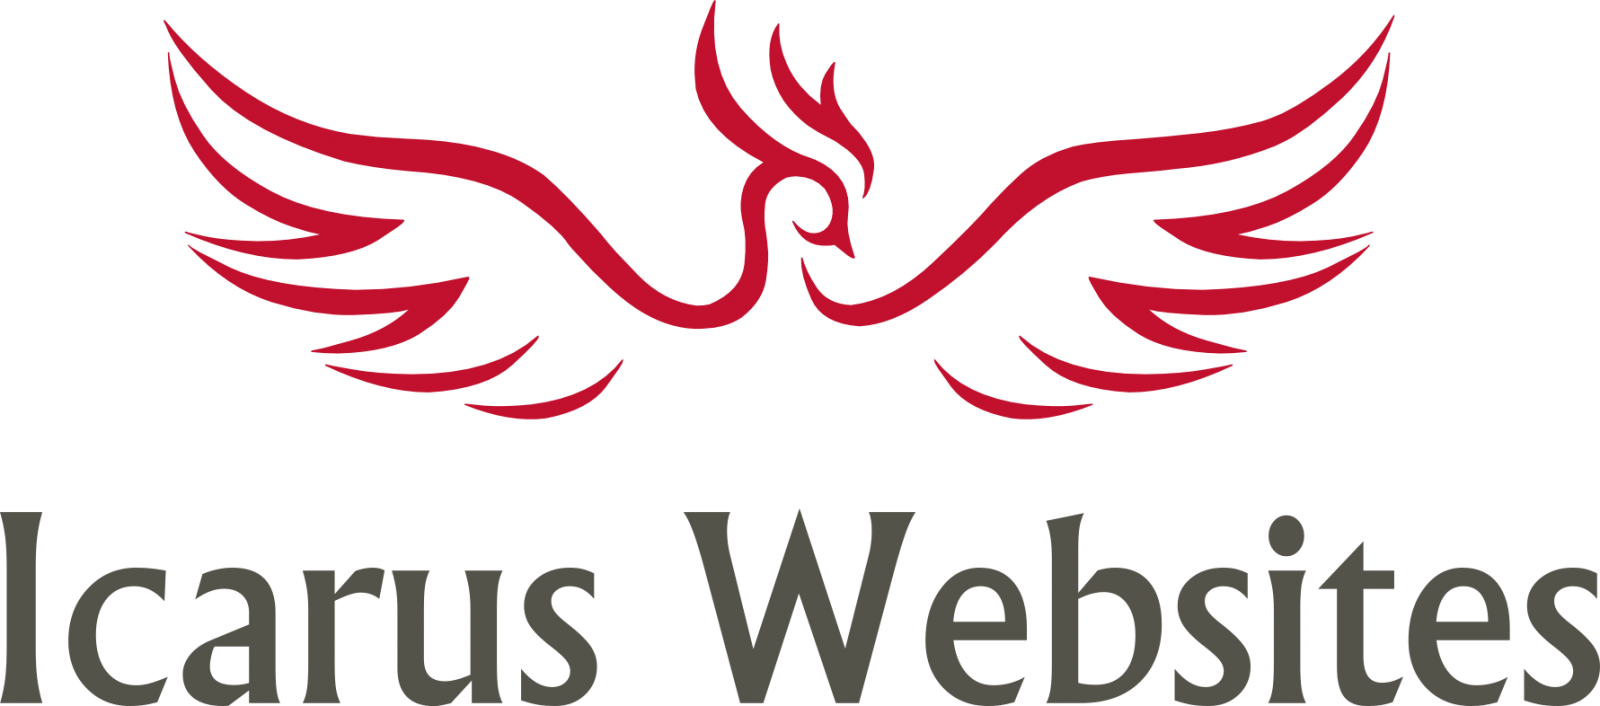 Icarus Websites